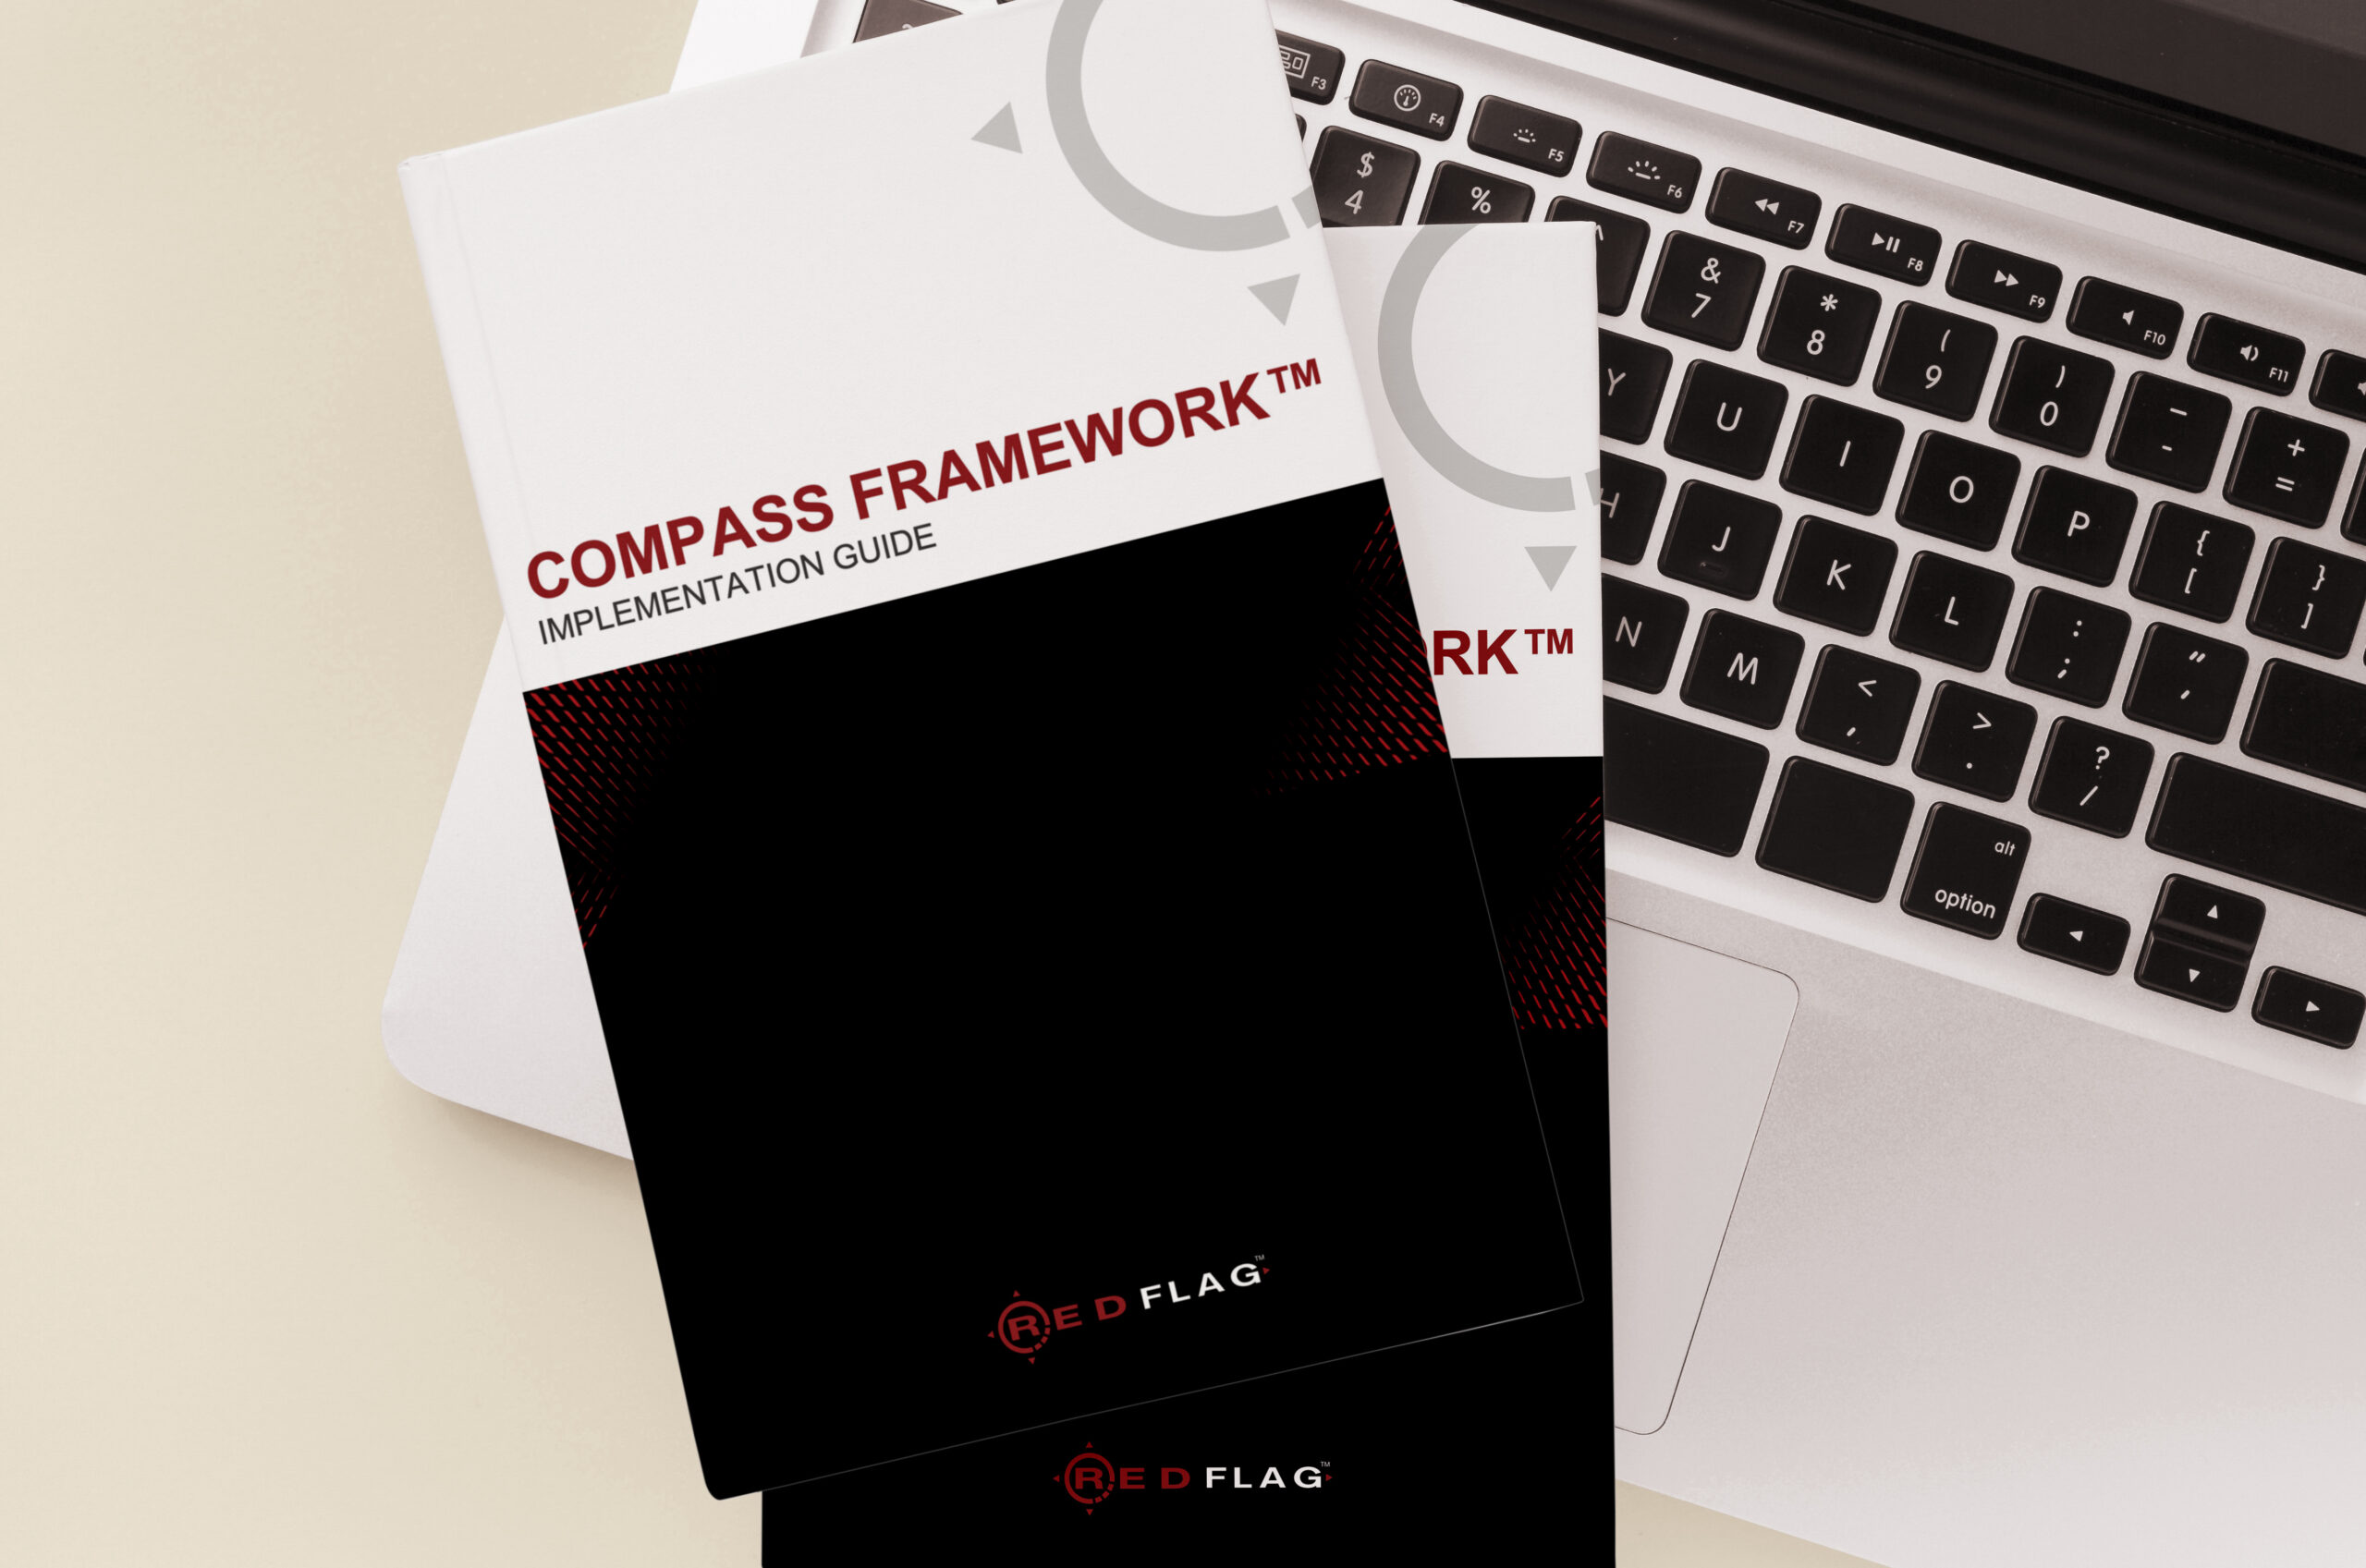 Compass Framework Implementation Guide